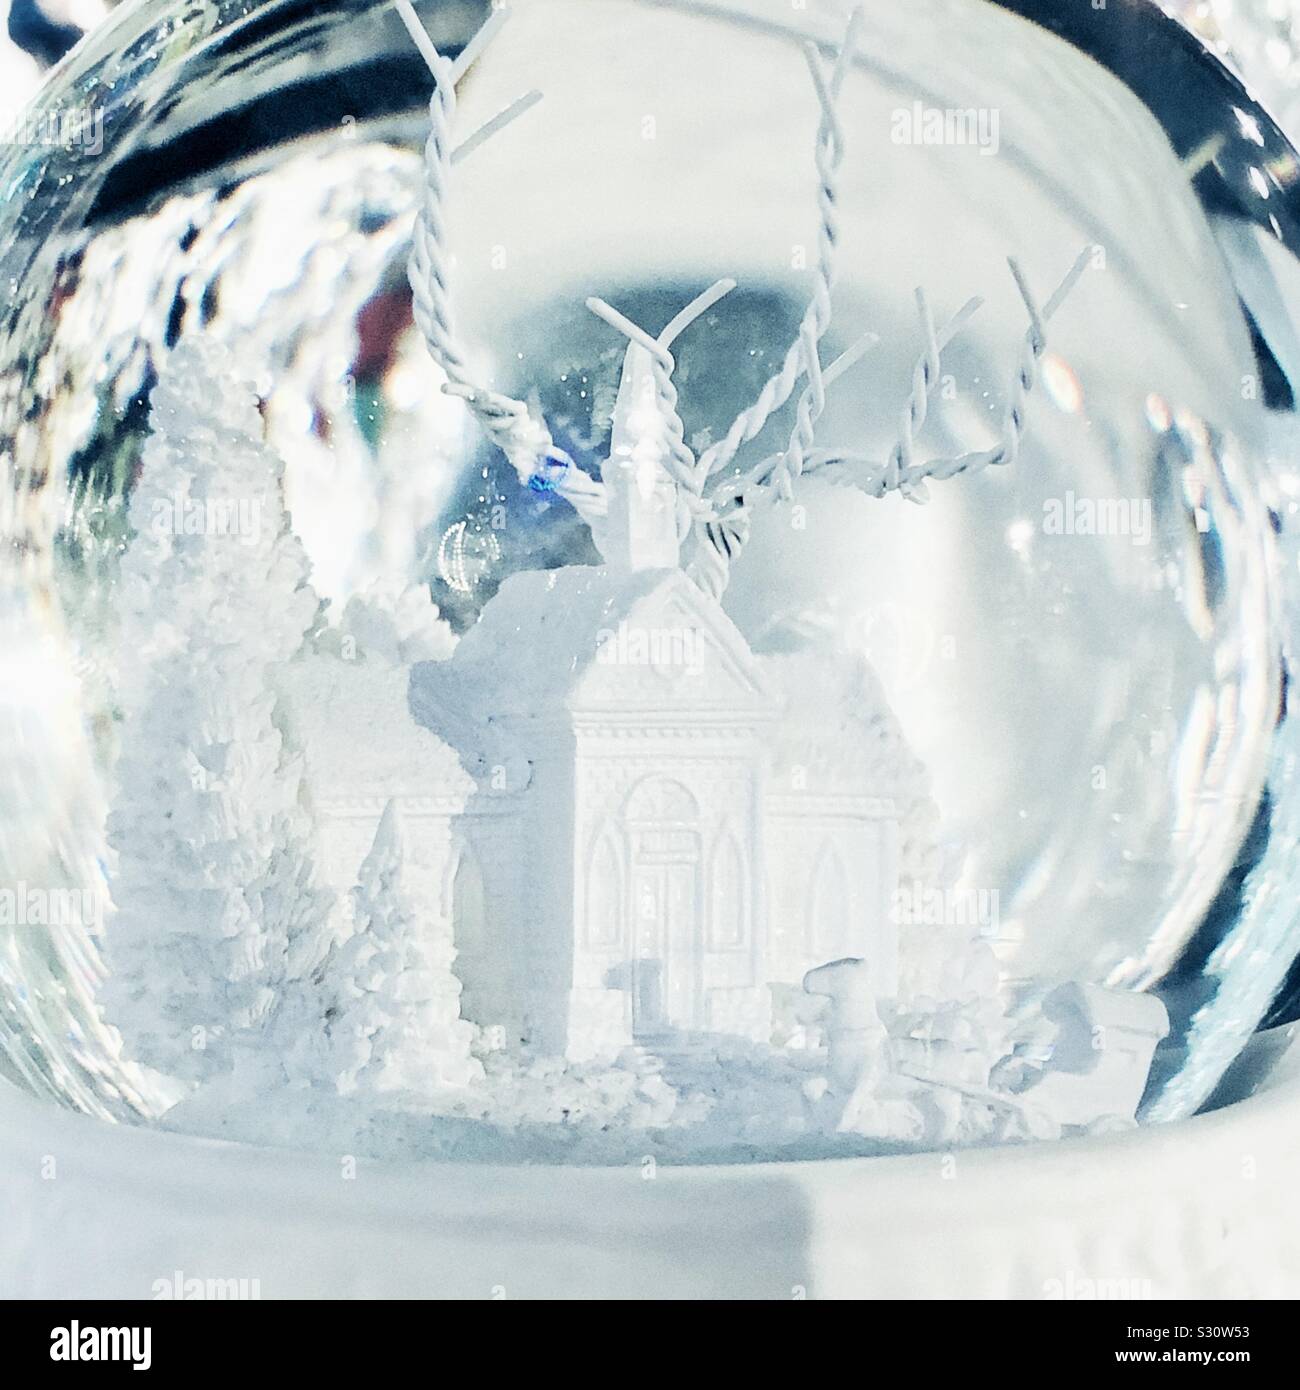 inside the white wintery snow globe Stock Photo